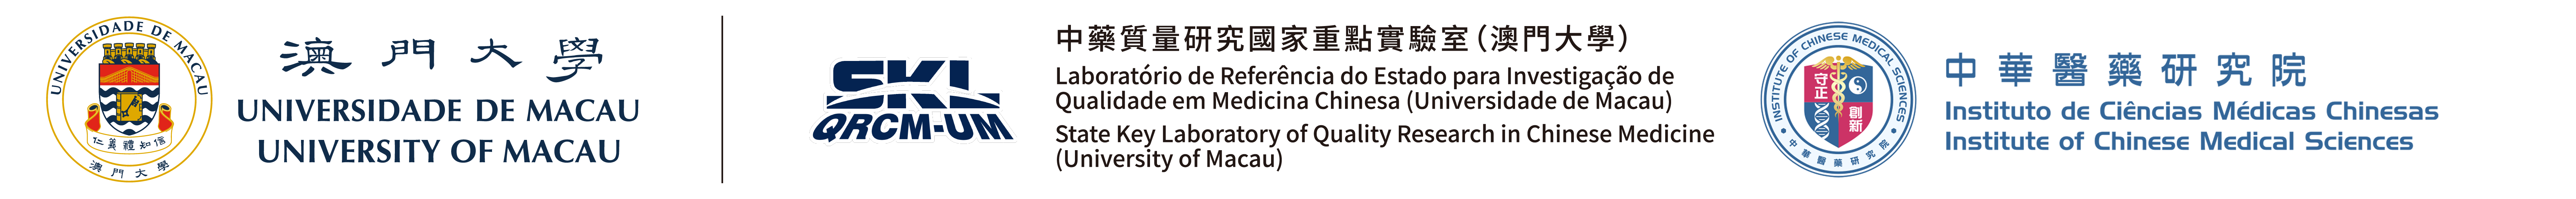 SKL-QRCM | ICMS | University of Macau Logo